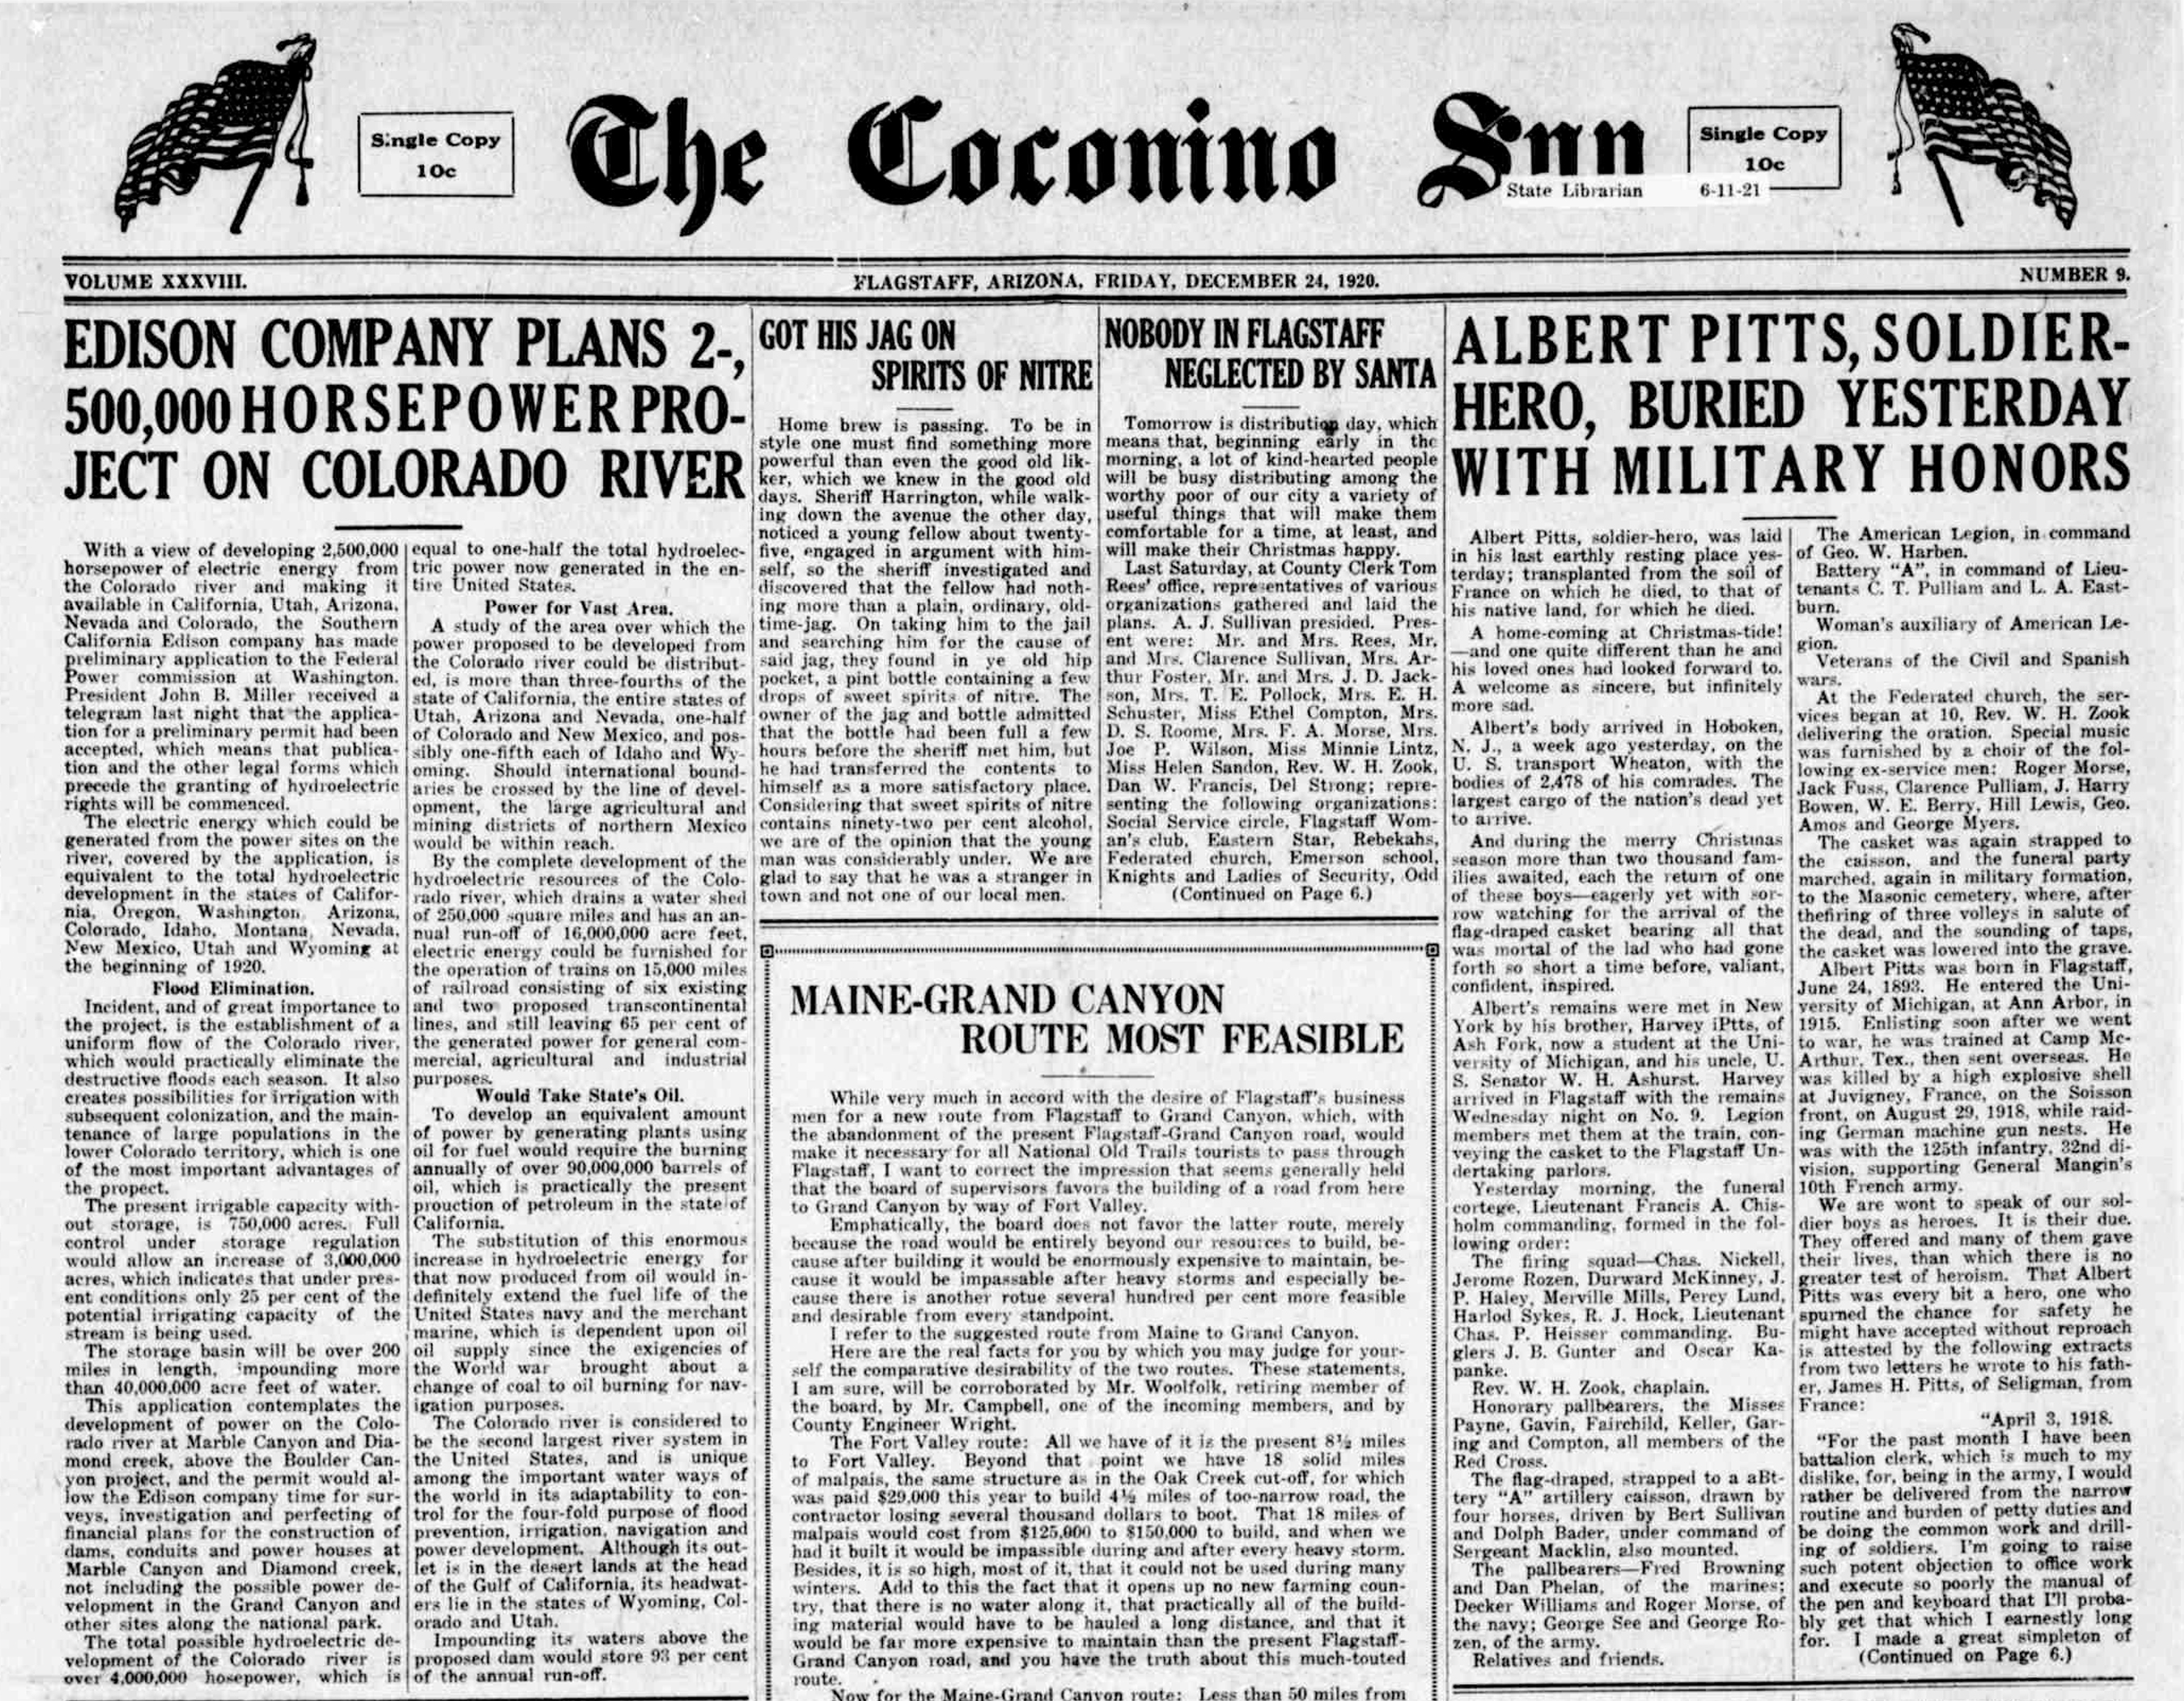 Coconino Sun: Pitts is buried